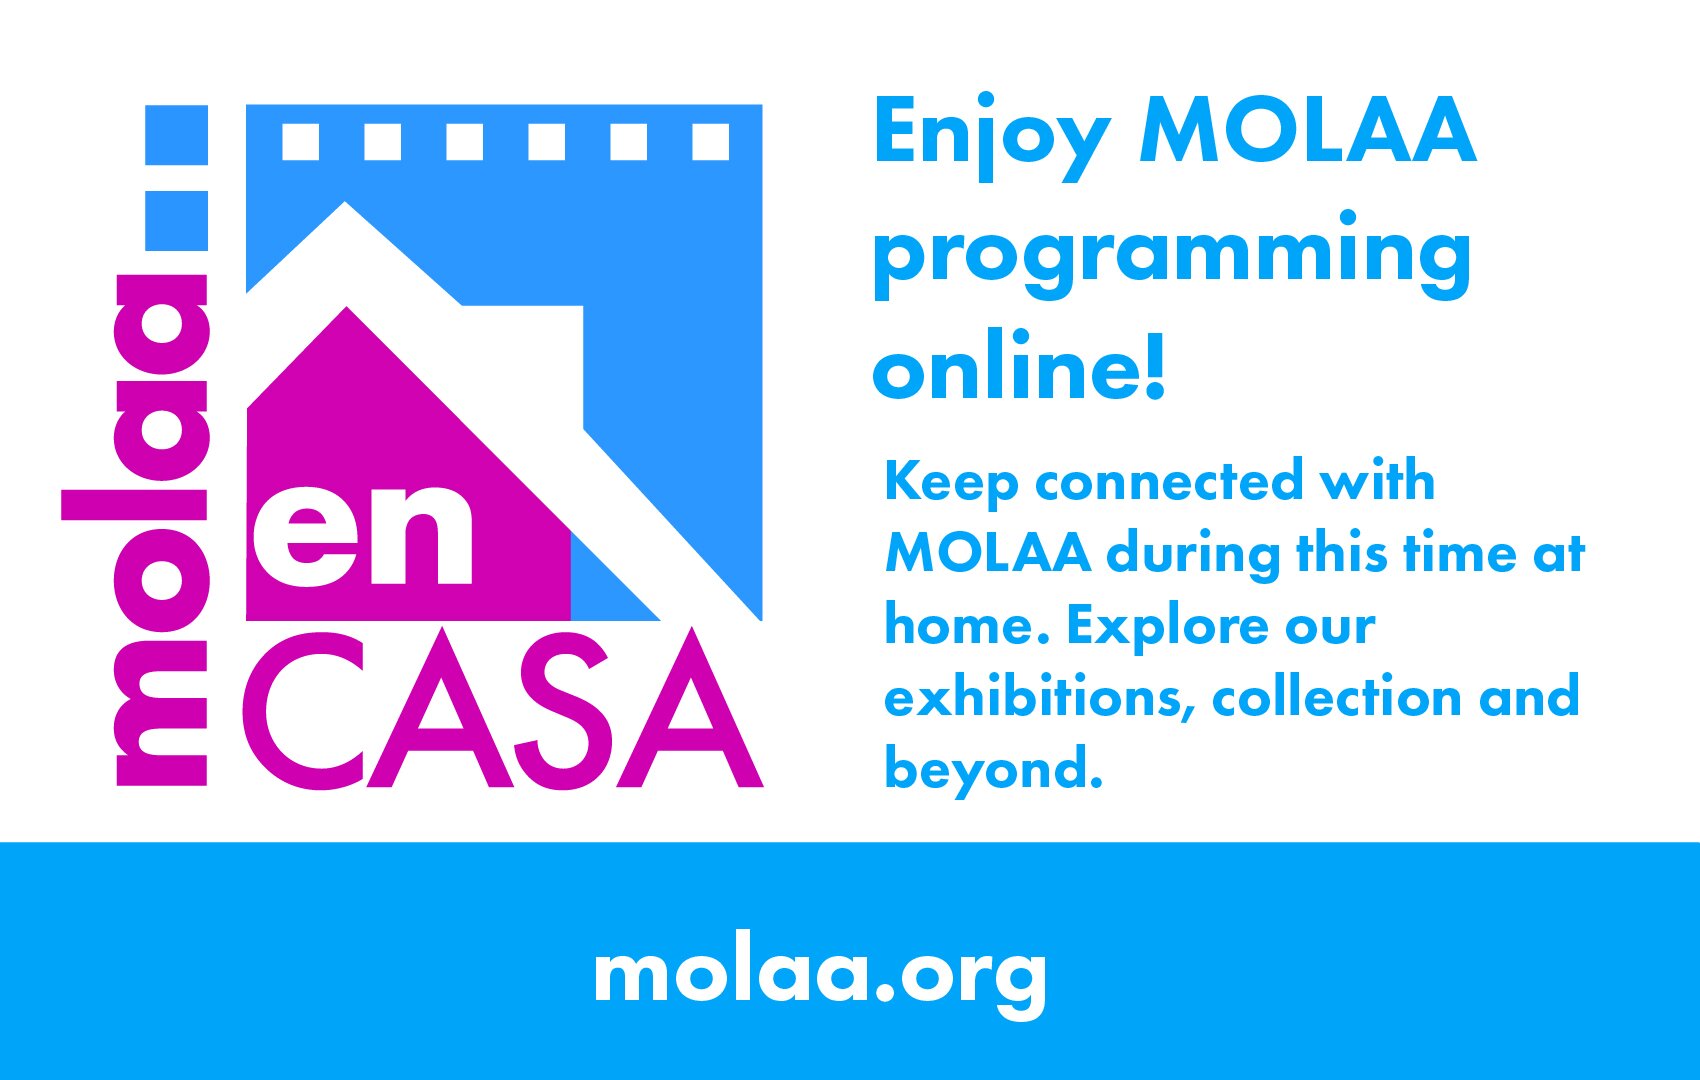 MOLAA  Museum of Latin American Art